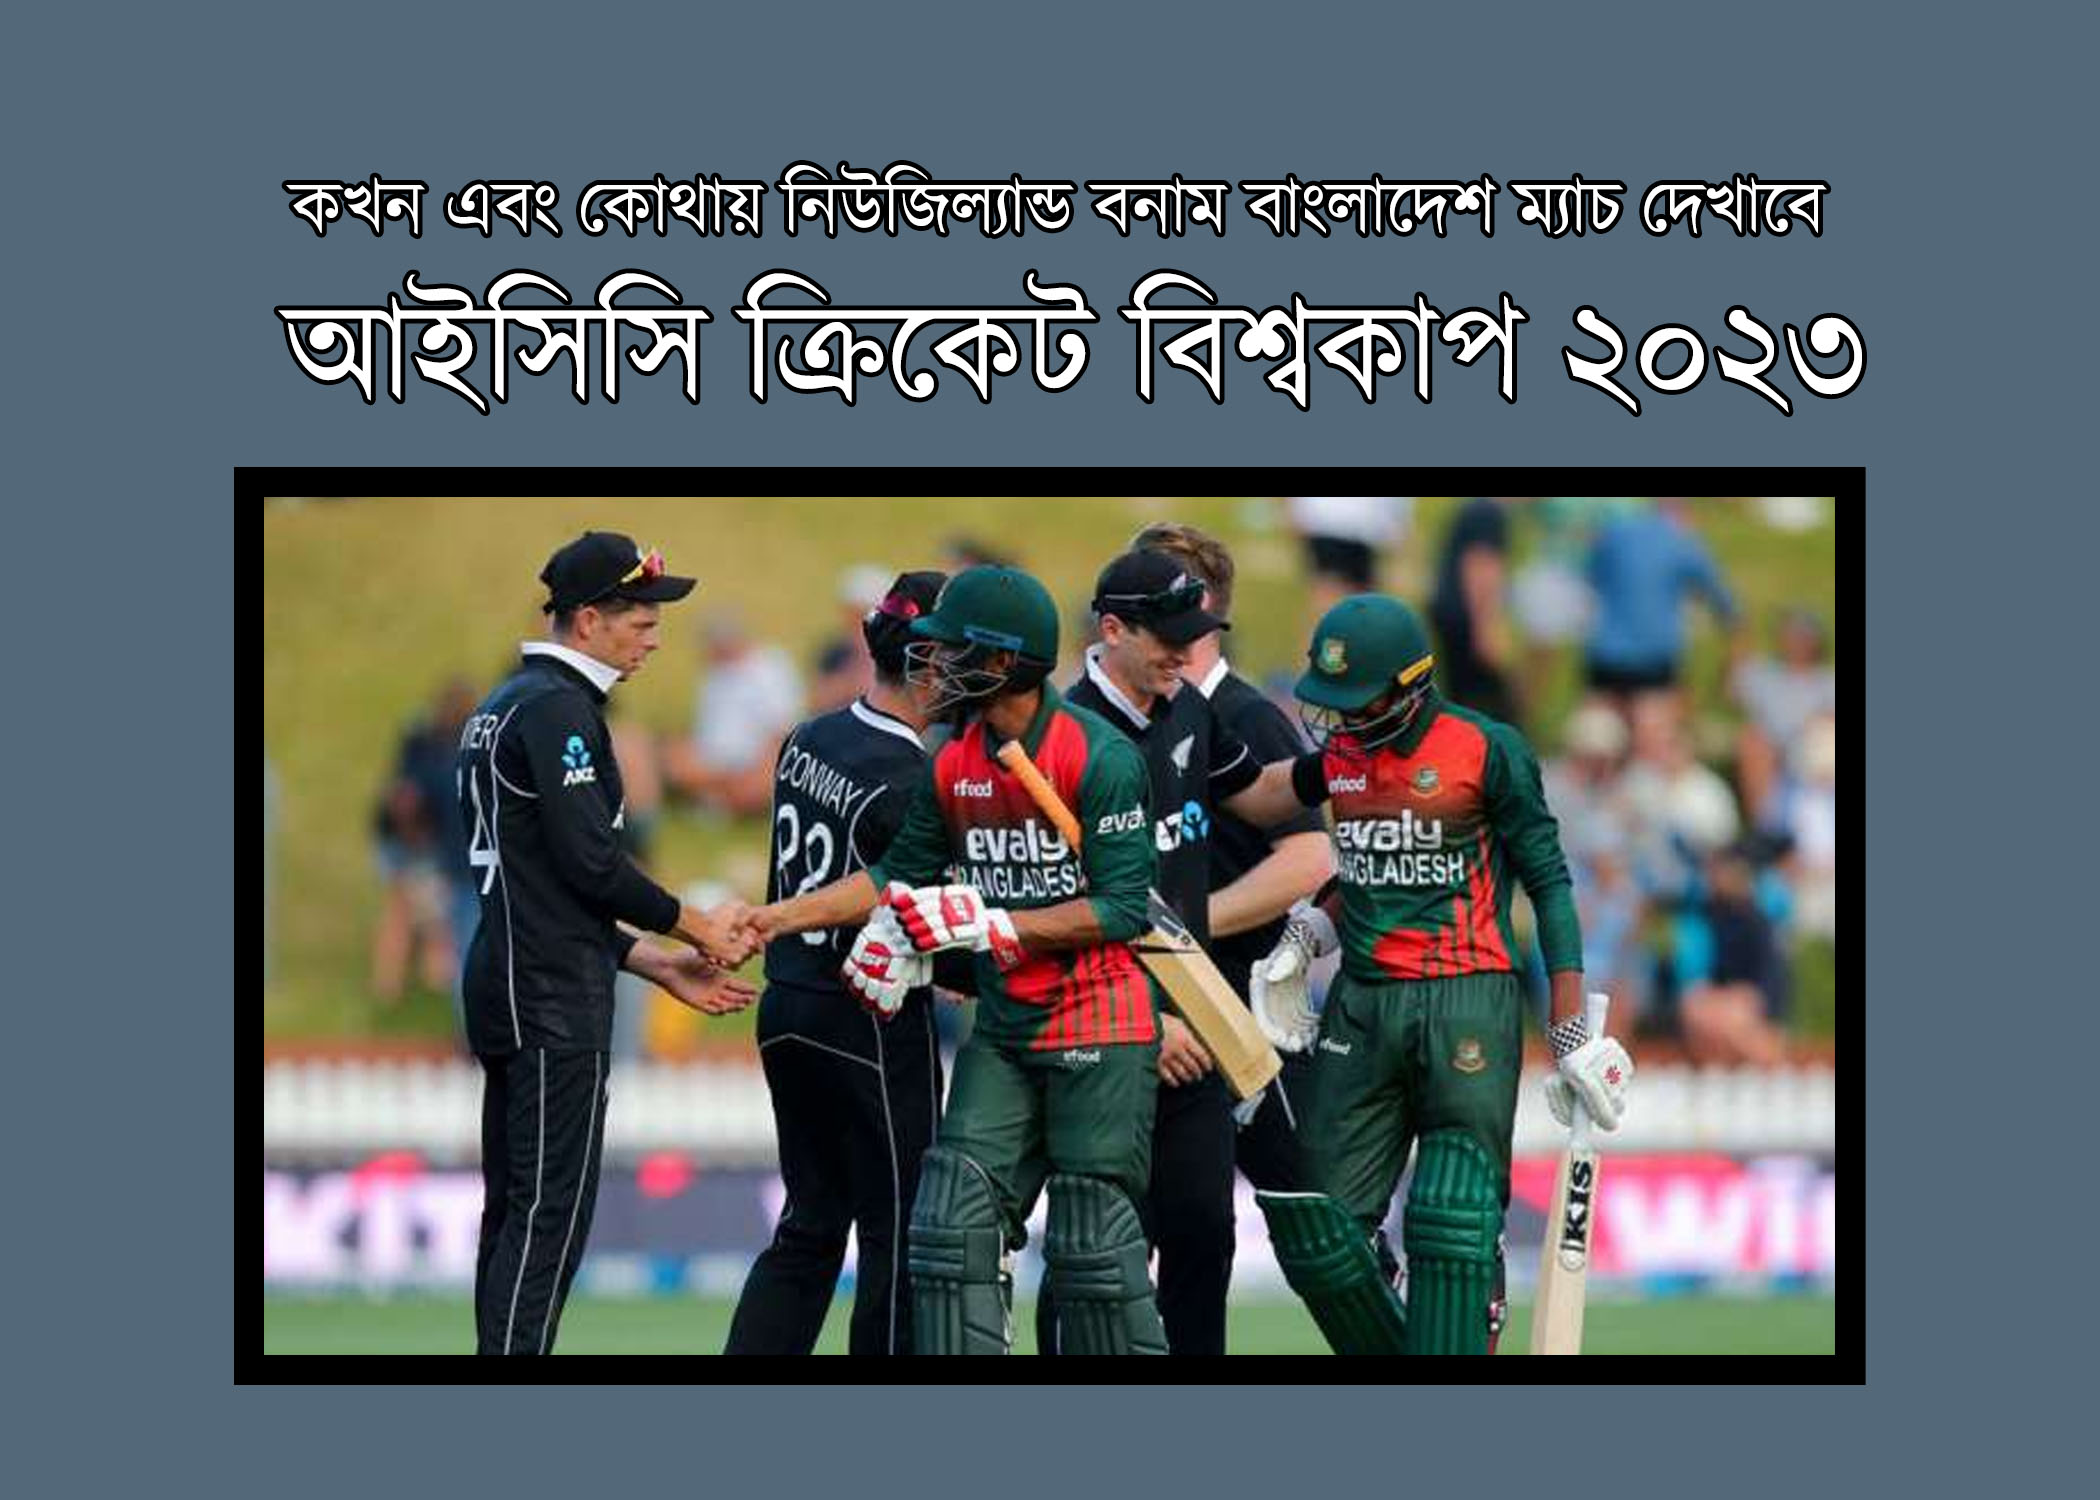 When And Where To Watch New Zealand Vs Bangladesh | Live Streaming, ICC Cricket World Cup 2023, কখন এবং কোথায় নিউজিল্যান্ড বনাম বাংলাদেশ ম্যাচ দেখতে হবে | আইসিসি ক্রিকেট বিশ্বকাপ 2023, When And Where To Watch New Zealand Vs Bangladesh, Live Streaming, ICC Cricket World Cup 2023, কখন এবং কোথায় নিউজিল্যান্ড বনাম বাংলাদেশ ম্যাচ দেখতে হবে, আইসিসি ক্রিকেট বিশ্বকাপ 2023, new zealand tour of bangladesh 2023,bangladesh vs new zealand,bangladesh,new zealand,bangladesh vs new zealand 2023,new zealand vs. bangladesh,bangladesh vs new zealand live,bangladesh vs new zealand series 2023,bangladesh vs new zealand odi series 2023,new zealand vs bangladesh,odi series bangladesh vs new zealand 2023,bangladesh next match,bangladesh cricket news,bangladesh next series,new zealand vs bangladesh series 2023, বাংলাদেশ বনাম নিউজিল্যান্ড,বাংলাদেশ বনাম নিউজিল্যান্ড সিরিজ ২০২৩,বাংলাদেশ বনাম শ্রীলংকা,বাংলাদেশ ক্রিকেট নিউজ,বাংলাদেশ বনাম আর্জেন্টিনা ম্যাচ,আর্জেন্টিনা বনাম বংলাদেশ প্রীতি ফুটবল ম্যাচ,বাংলাদেশ বনাম ইংল্যান্ড,বাংলাদেশ বনাম আয়ারল্যান্ড,বাংলাদেশ - নিউজিল্যান্ড সিরিজের সময়সূচি,বাংলাদেশ বনাম ইংল্যান্ড সিরিজ,বাংলাদেশ বনাম আয়ারল্যান্ড লাইভ,বাংলাদেশ বনাম ইংল্যান্ড সিরিজ ২০২৩,বাংলাদেশ ম্যাচ,২০২৩ বিশ্বকাপে সেমিফাইনালে খেলতে বাংলাদেশের কয়টা ম্যাচ জিততে হবে,